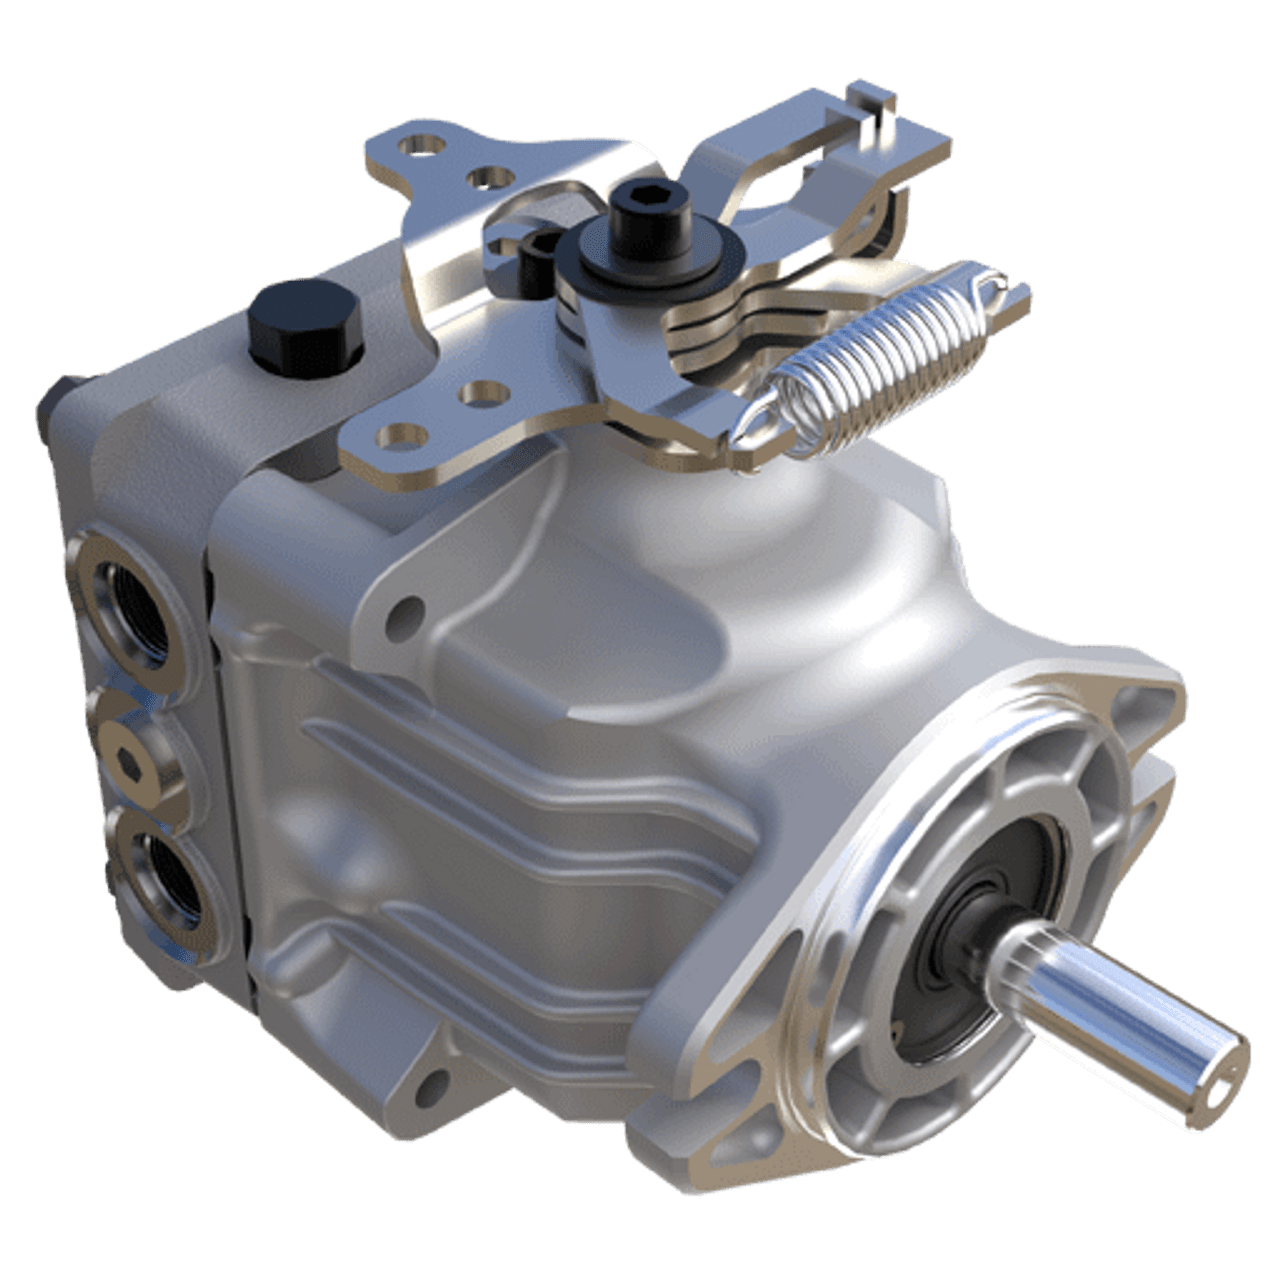 Hydro Gear PG-1GQQ-DY1X-XXXX Hydraulic Pump P Series | Original OEM Part | Free Shipping - LawnMowerPartsWorld.com